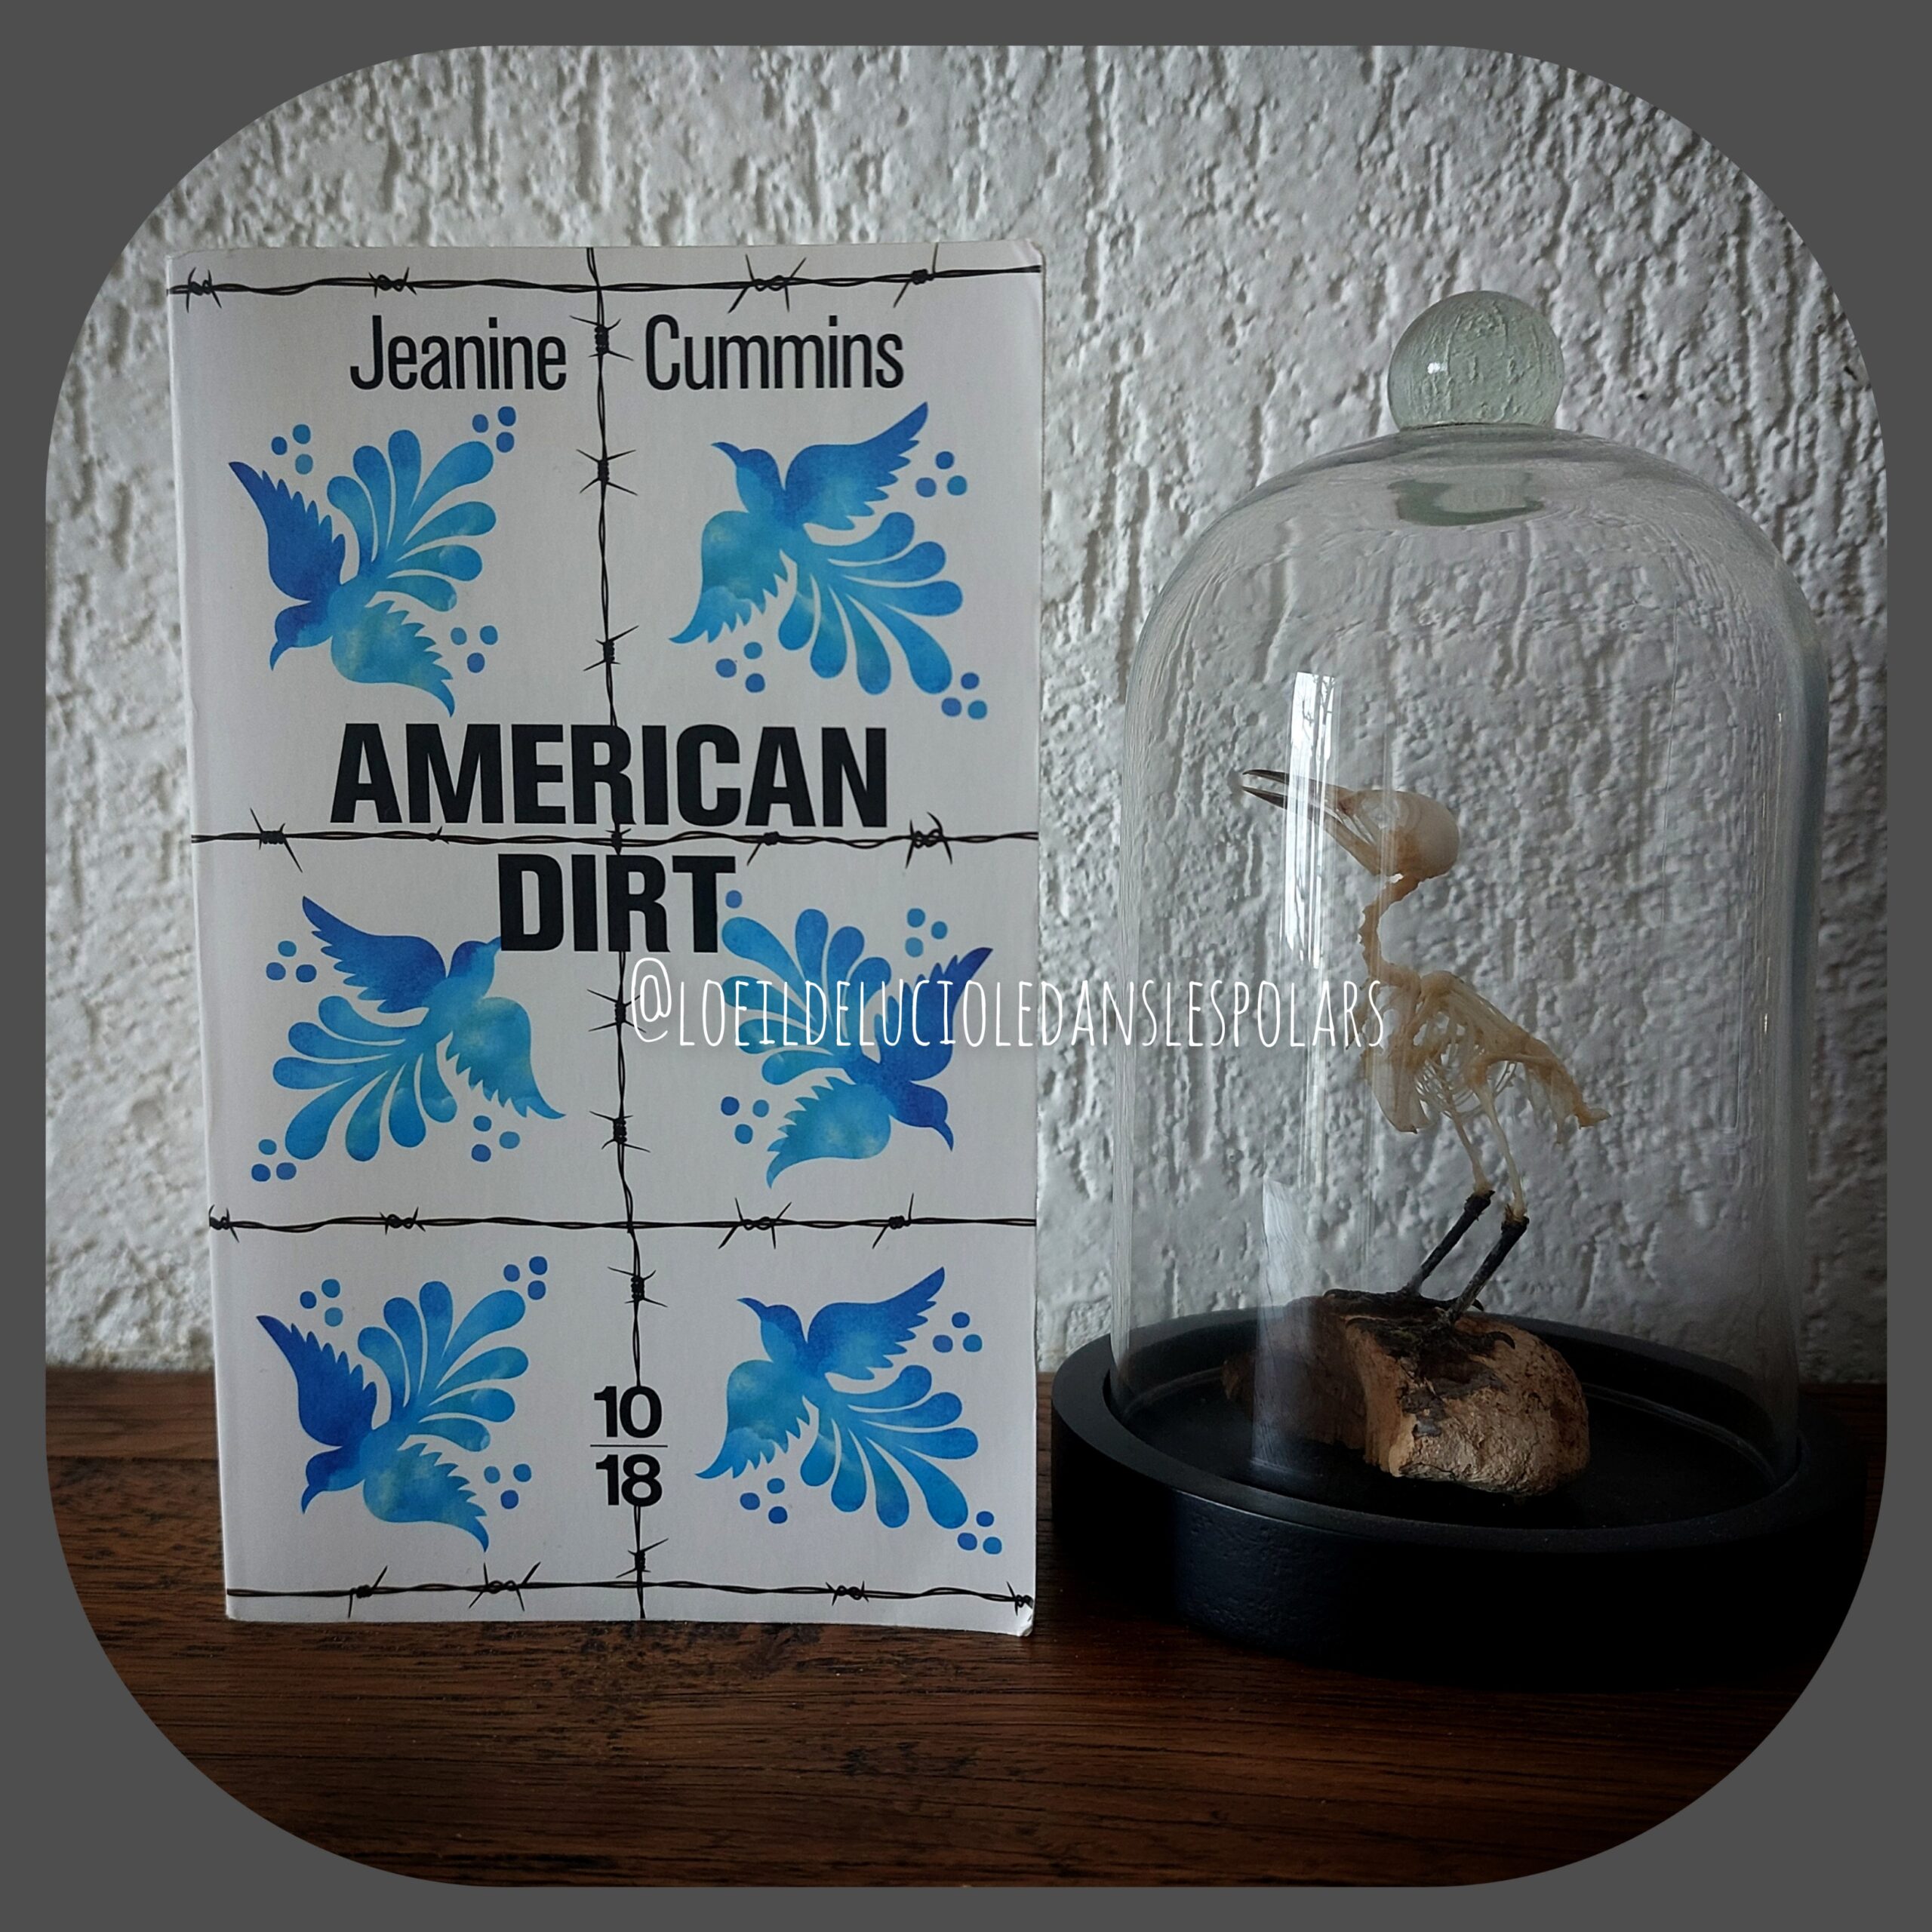 American dirt de Jeanine Cummins